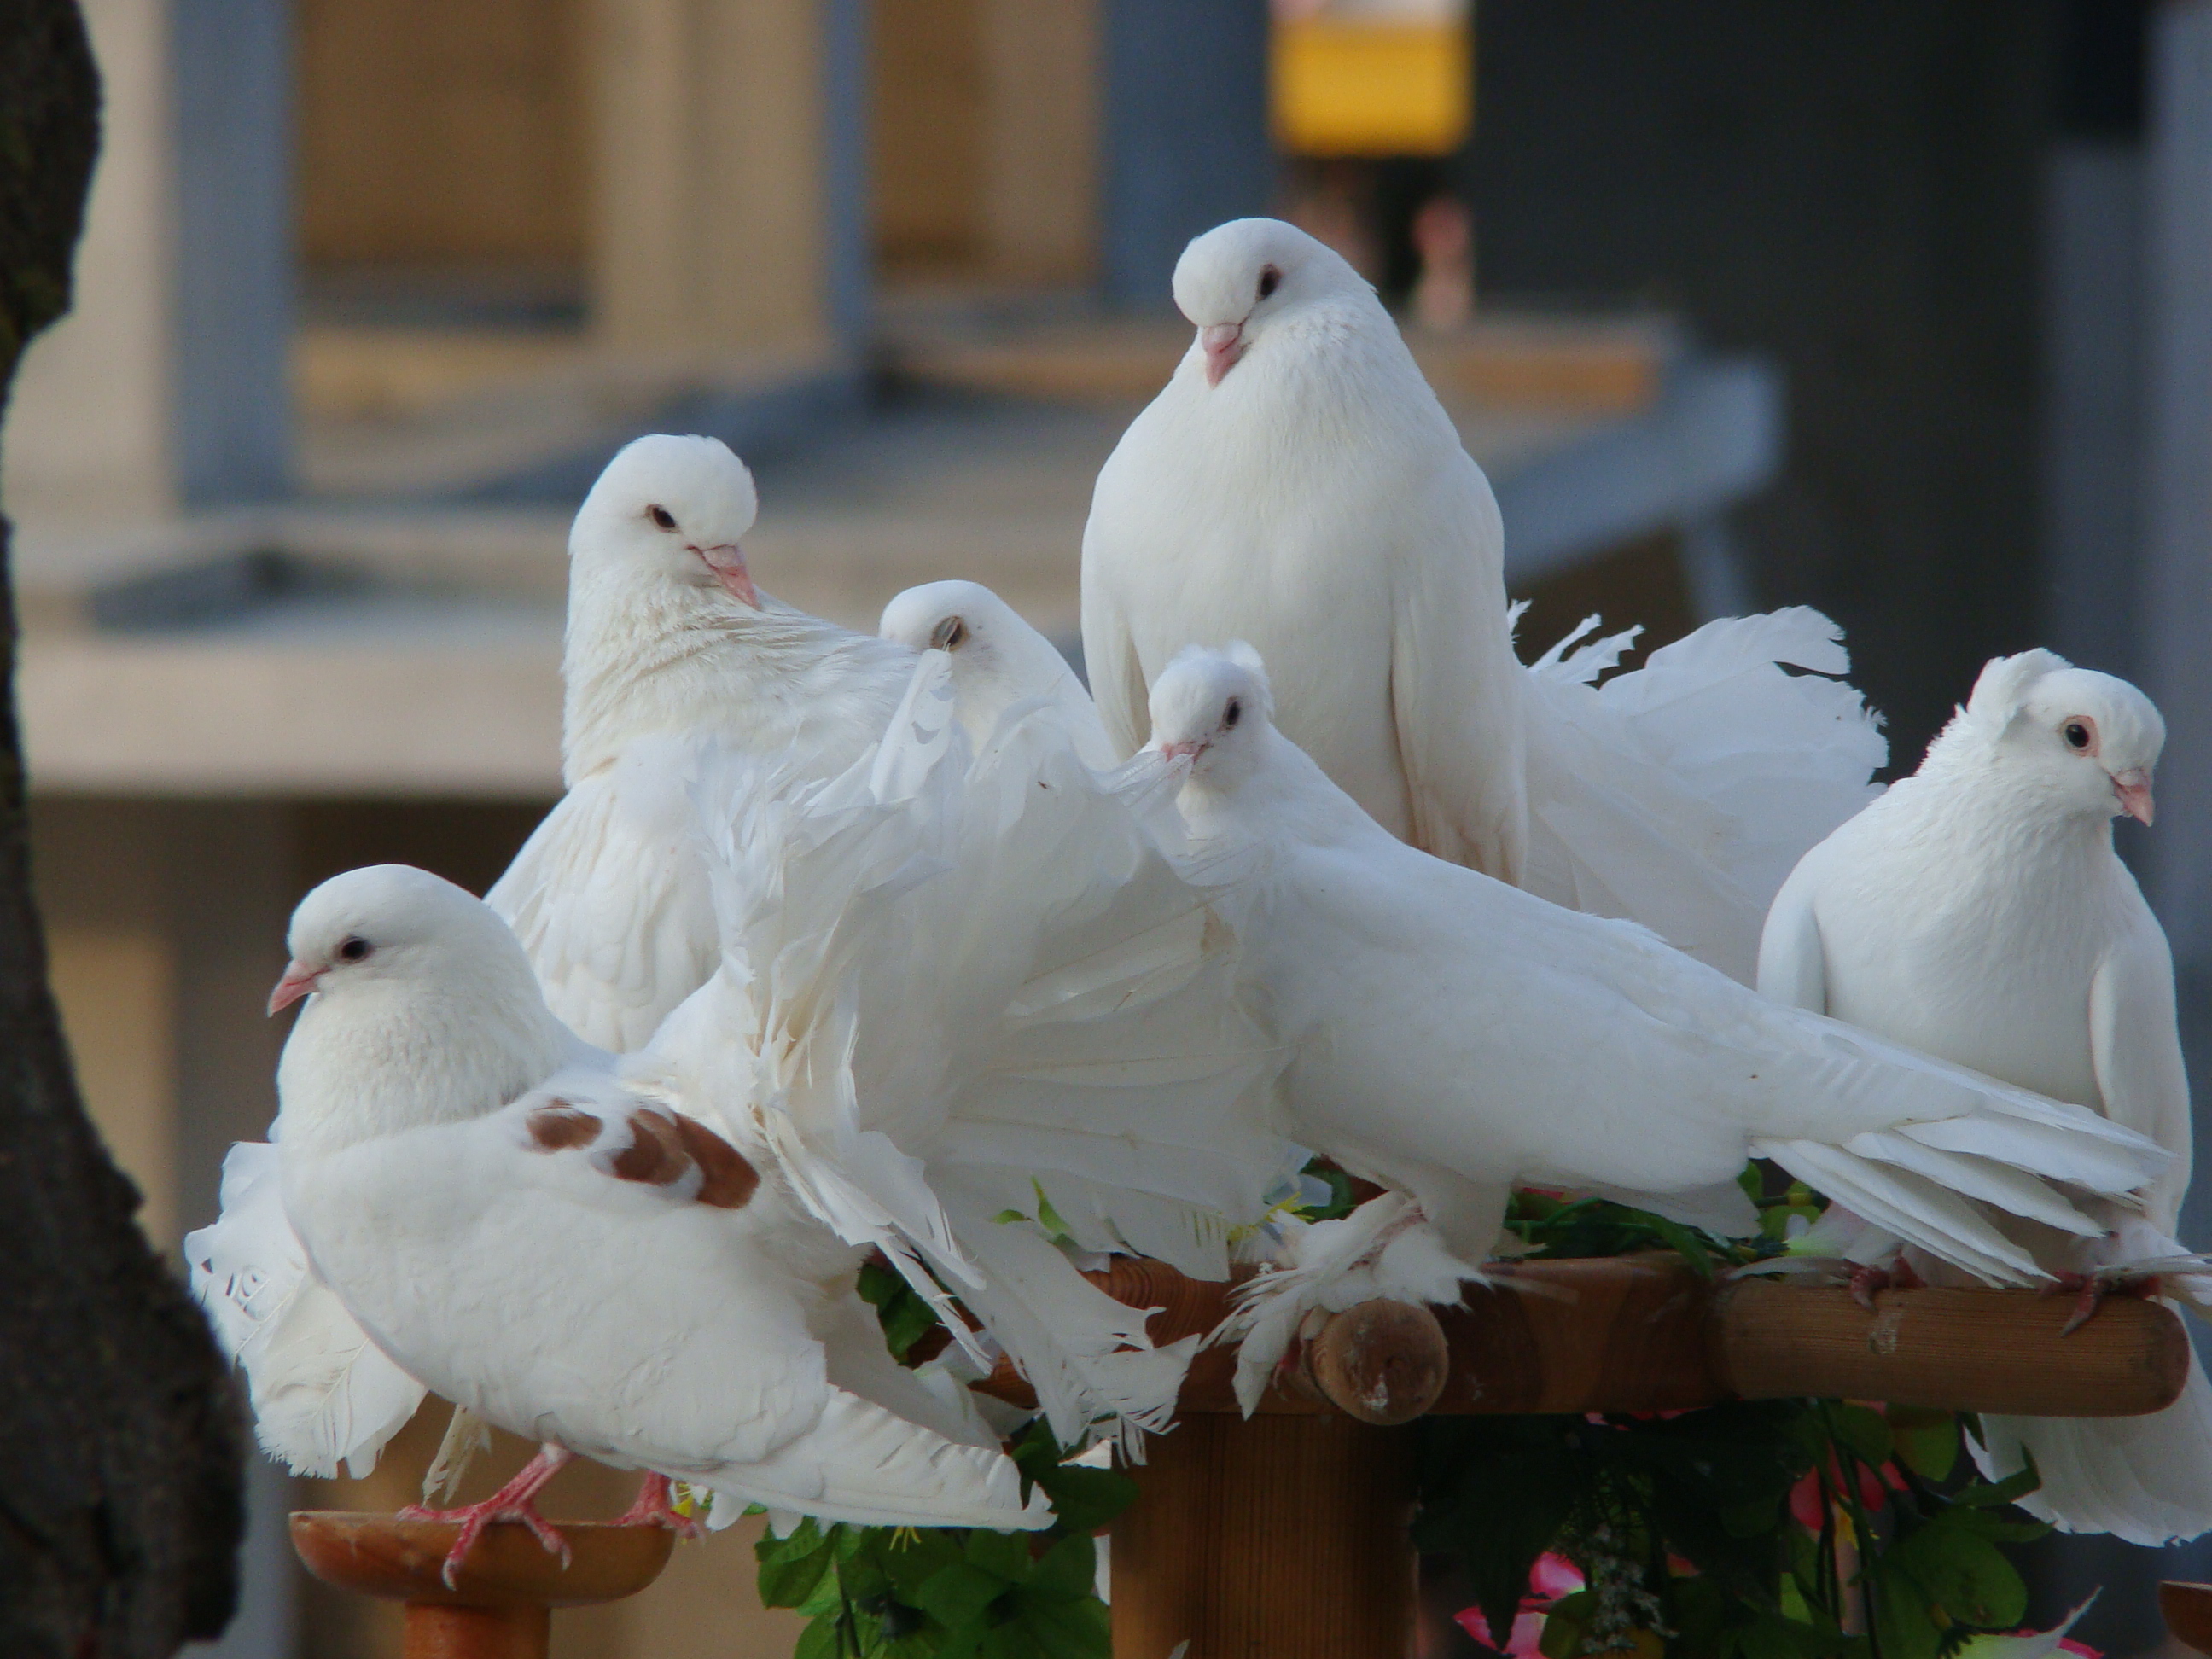 165957 descargar imagen animales, paloma, ave, paloma blanca, aves: fondos de pantalla y protectores de pantalla gratis